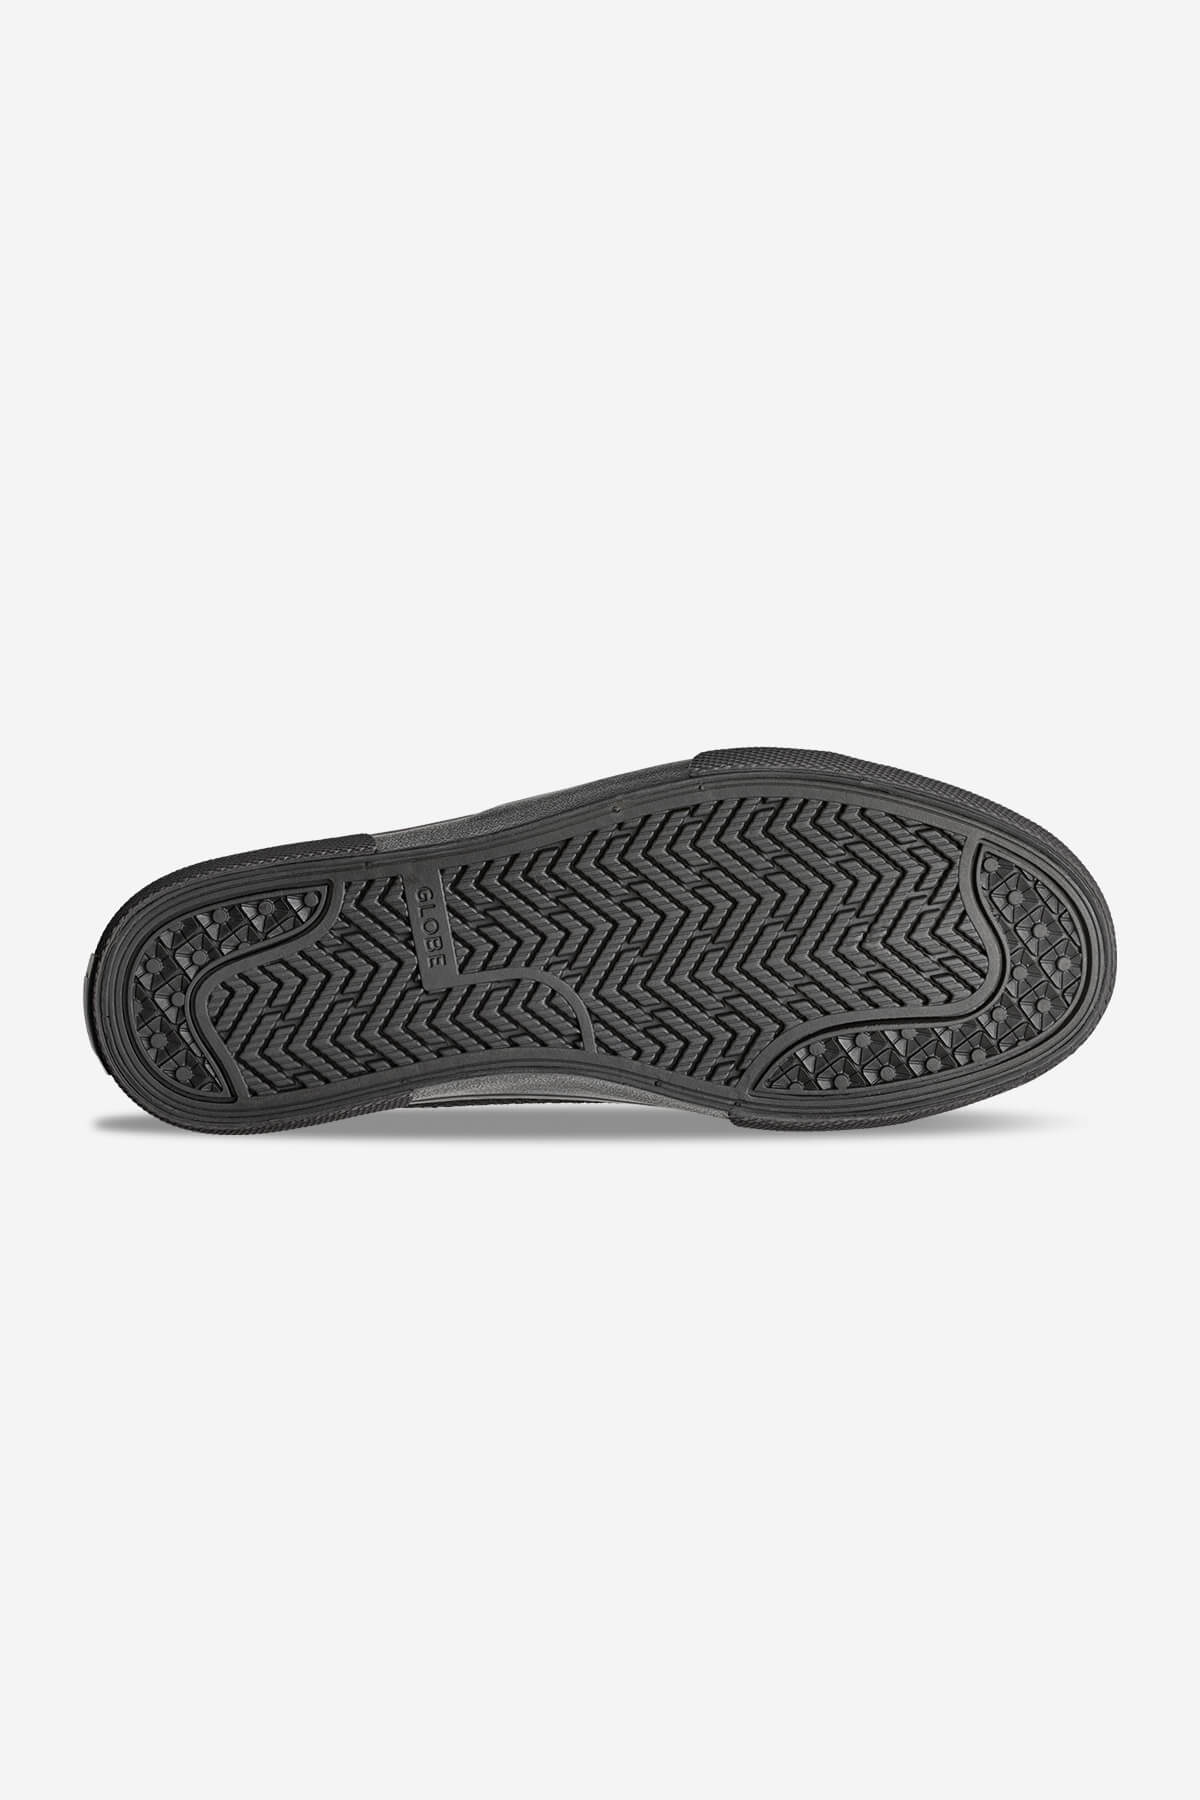 Globe - Surplus - Knit Noir/Knit/Noir - skateboard Chaussures